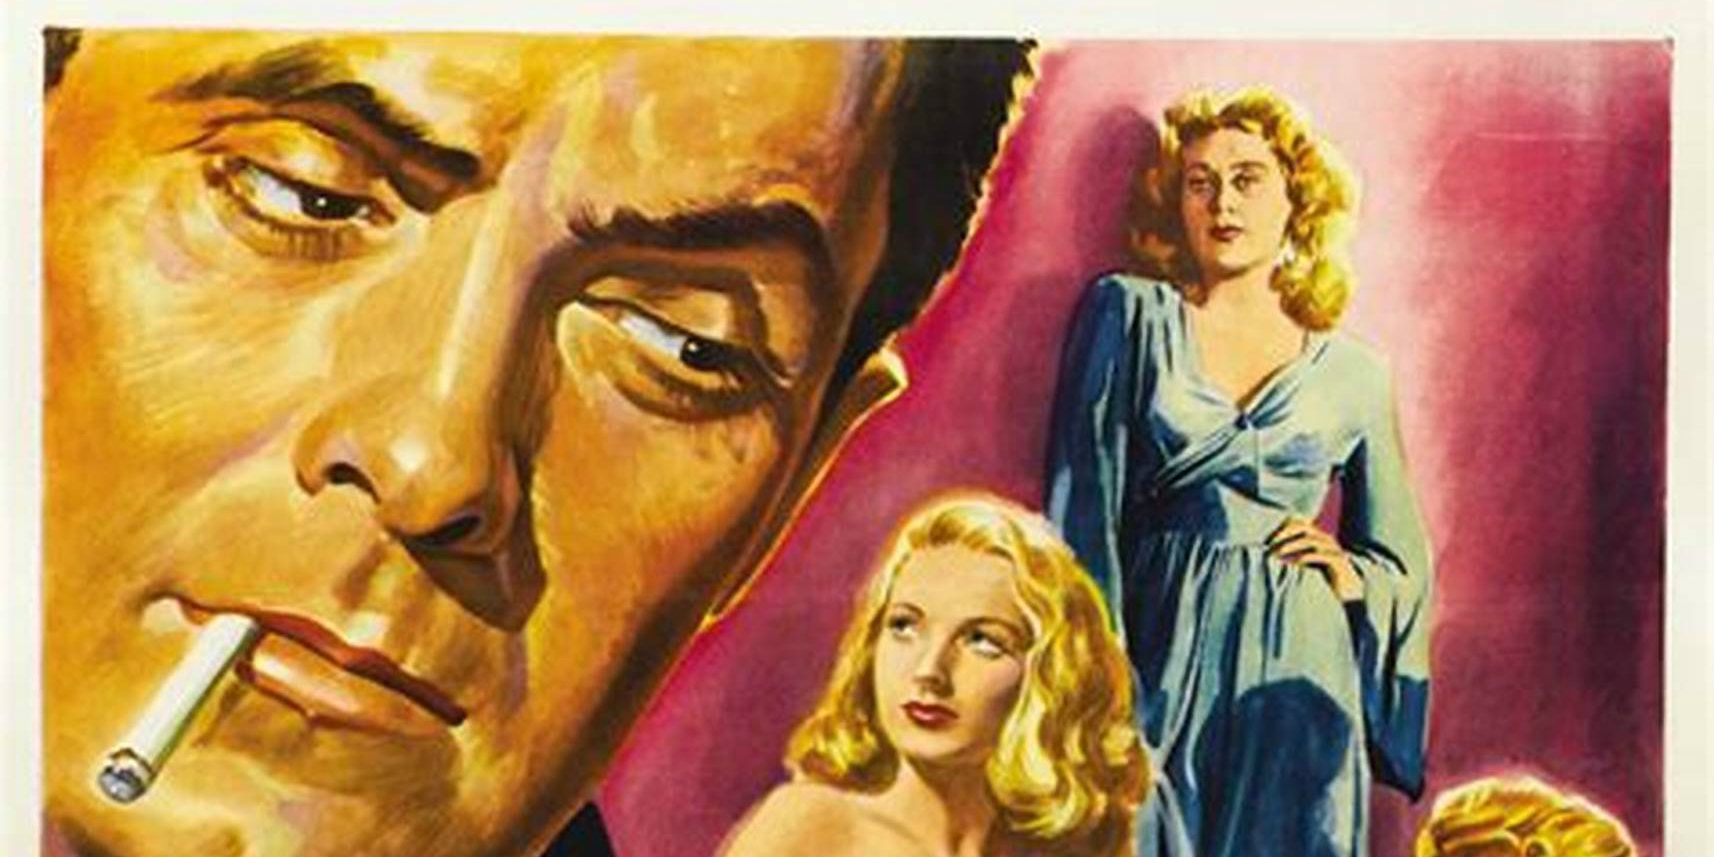 Nightmare Alley 1947 movie poster